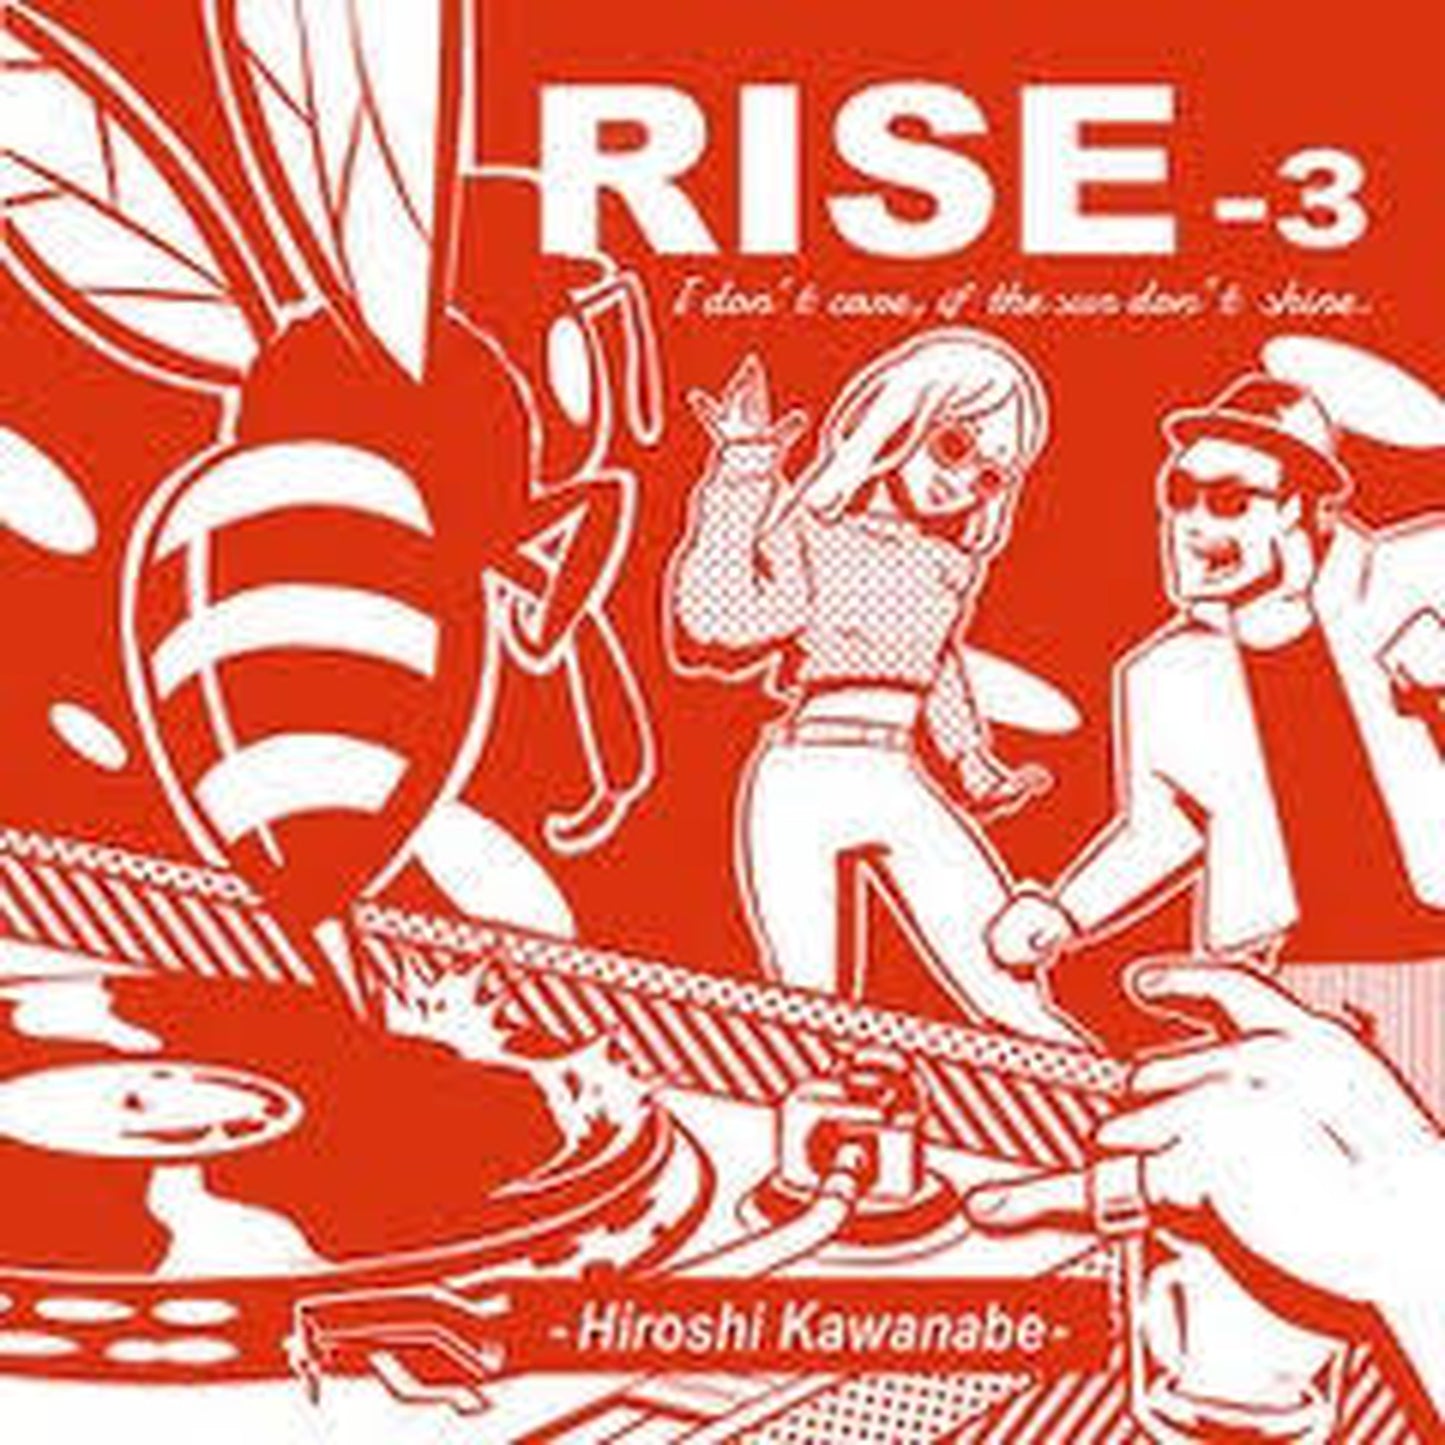 【CD】川辺ヒロシ(HIROSHI KAWANABE) - RISE 3 -Mix 2CD-